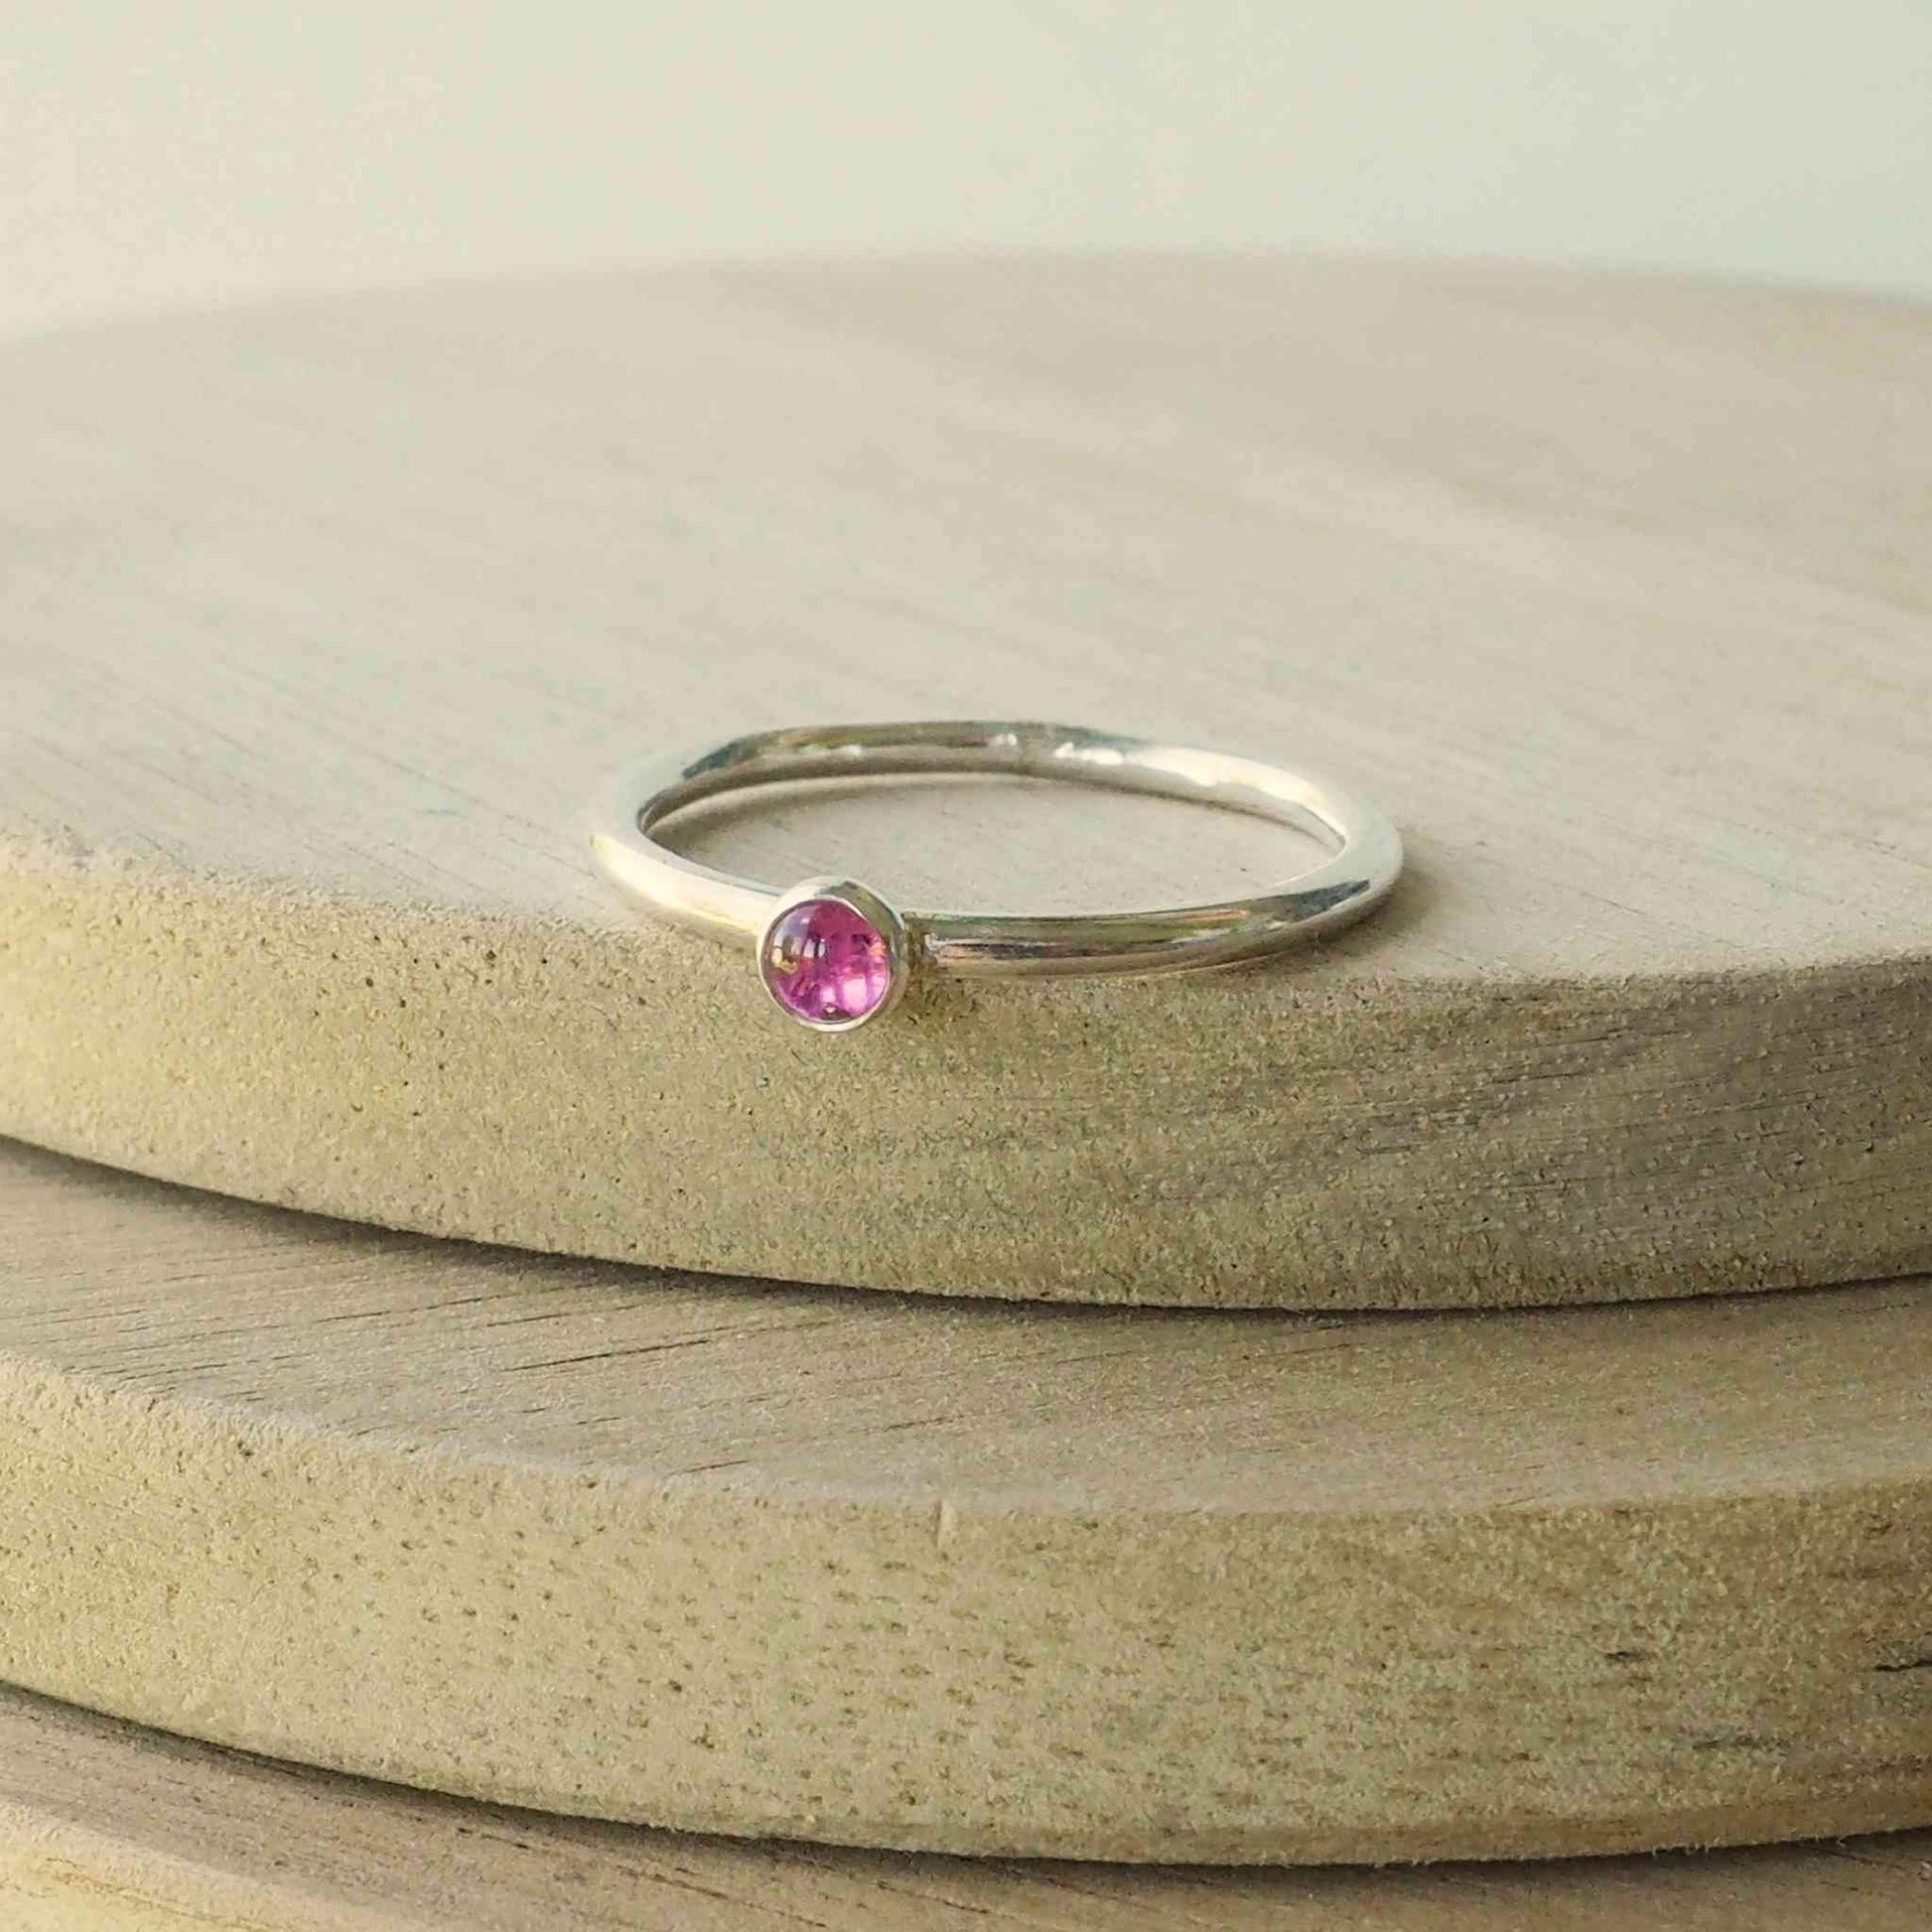 Pink tourmaline ring with a 3mm light pink gemstone. Handmade in Scotland by maram jewellery